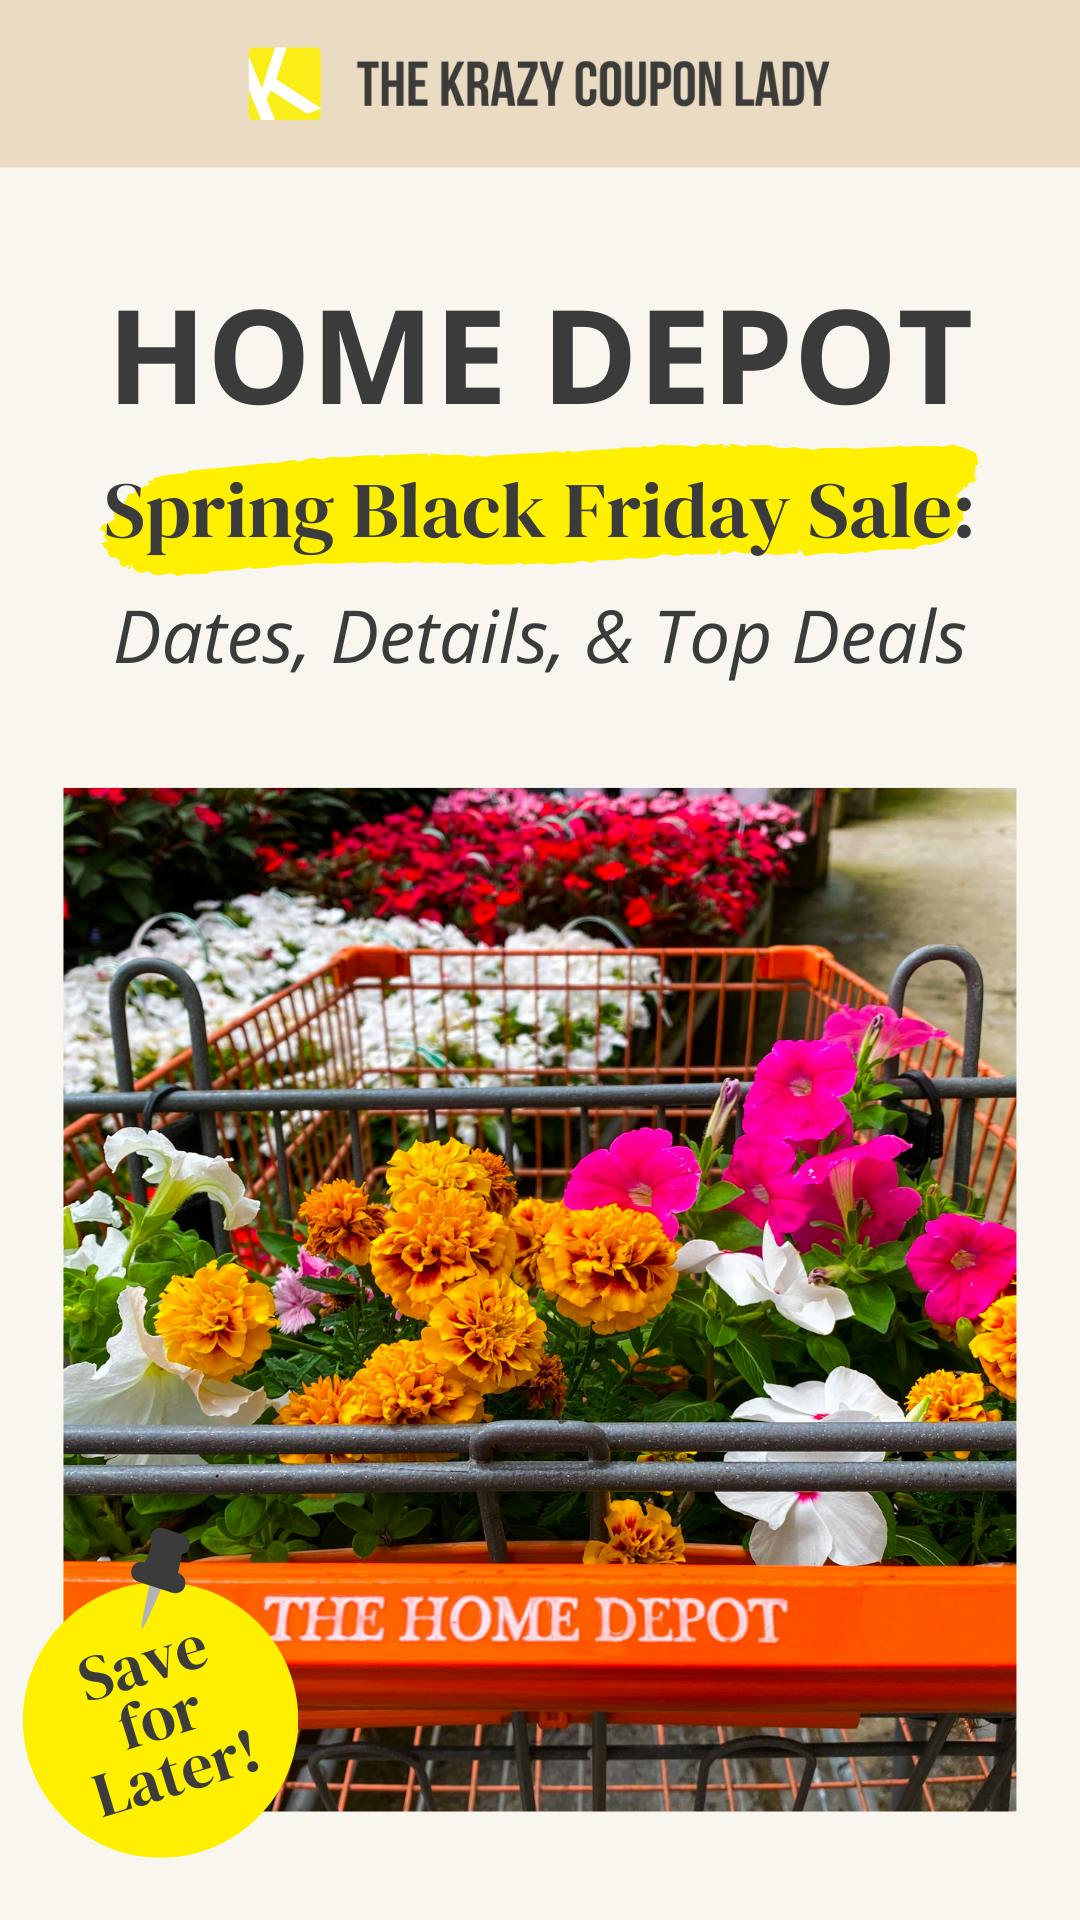 The Home Depot Spring Black Friday Sale Dates & Details The Krazy